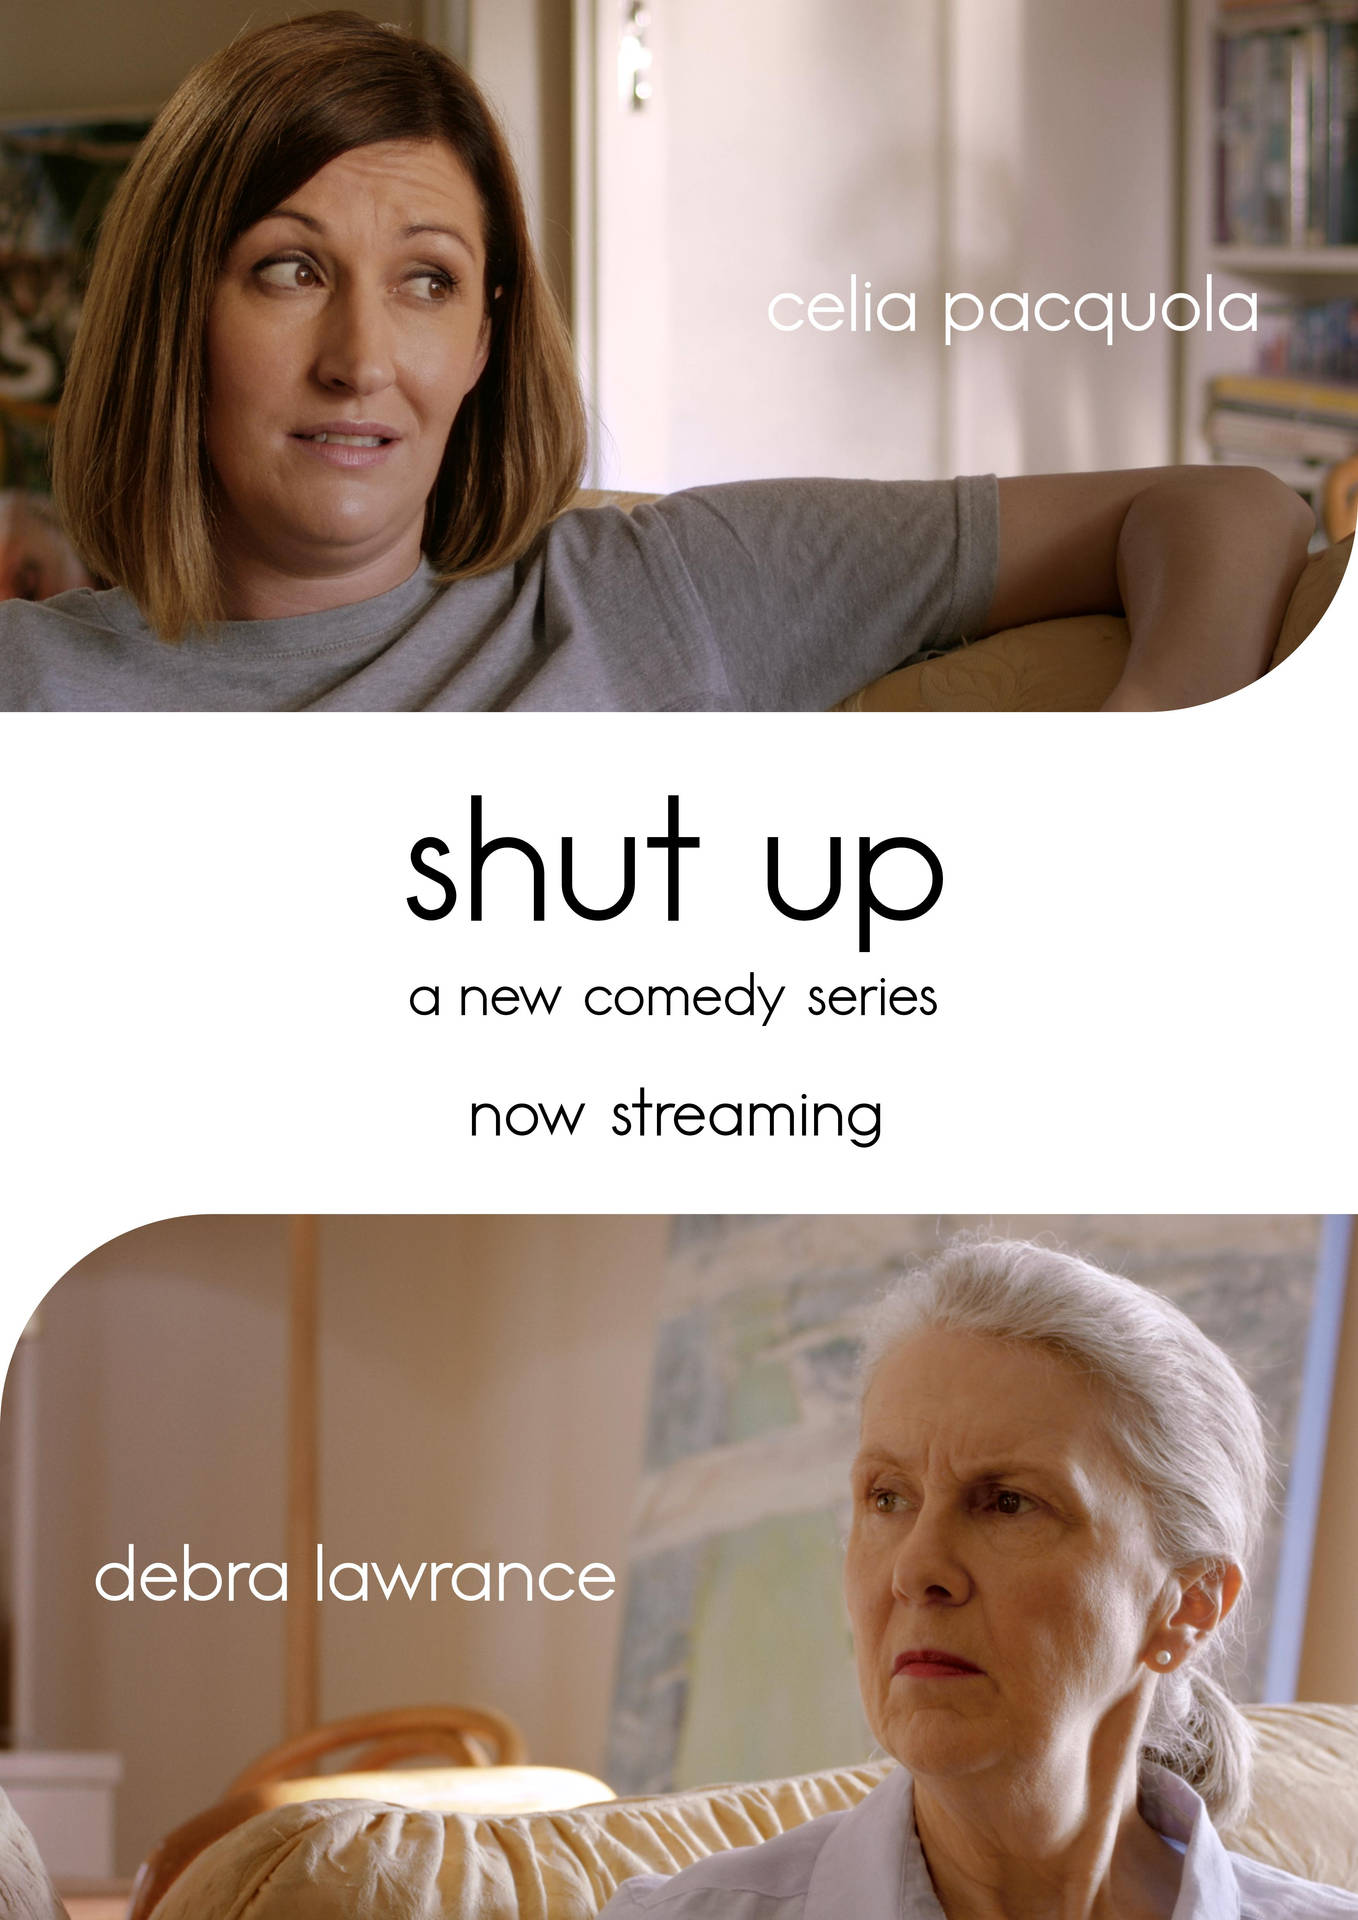 Shut Up Comedy Official Poster Wallpaper